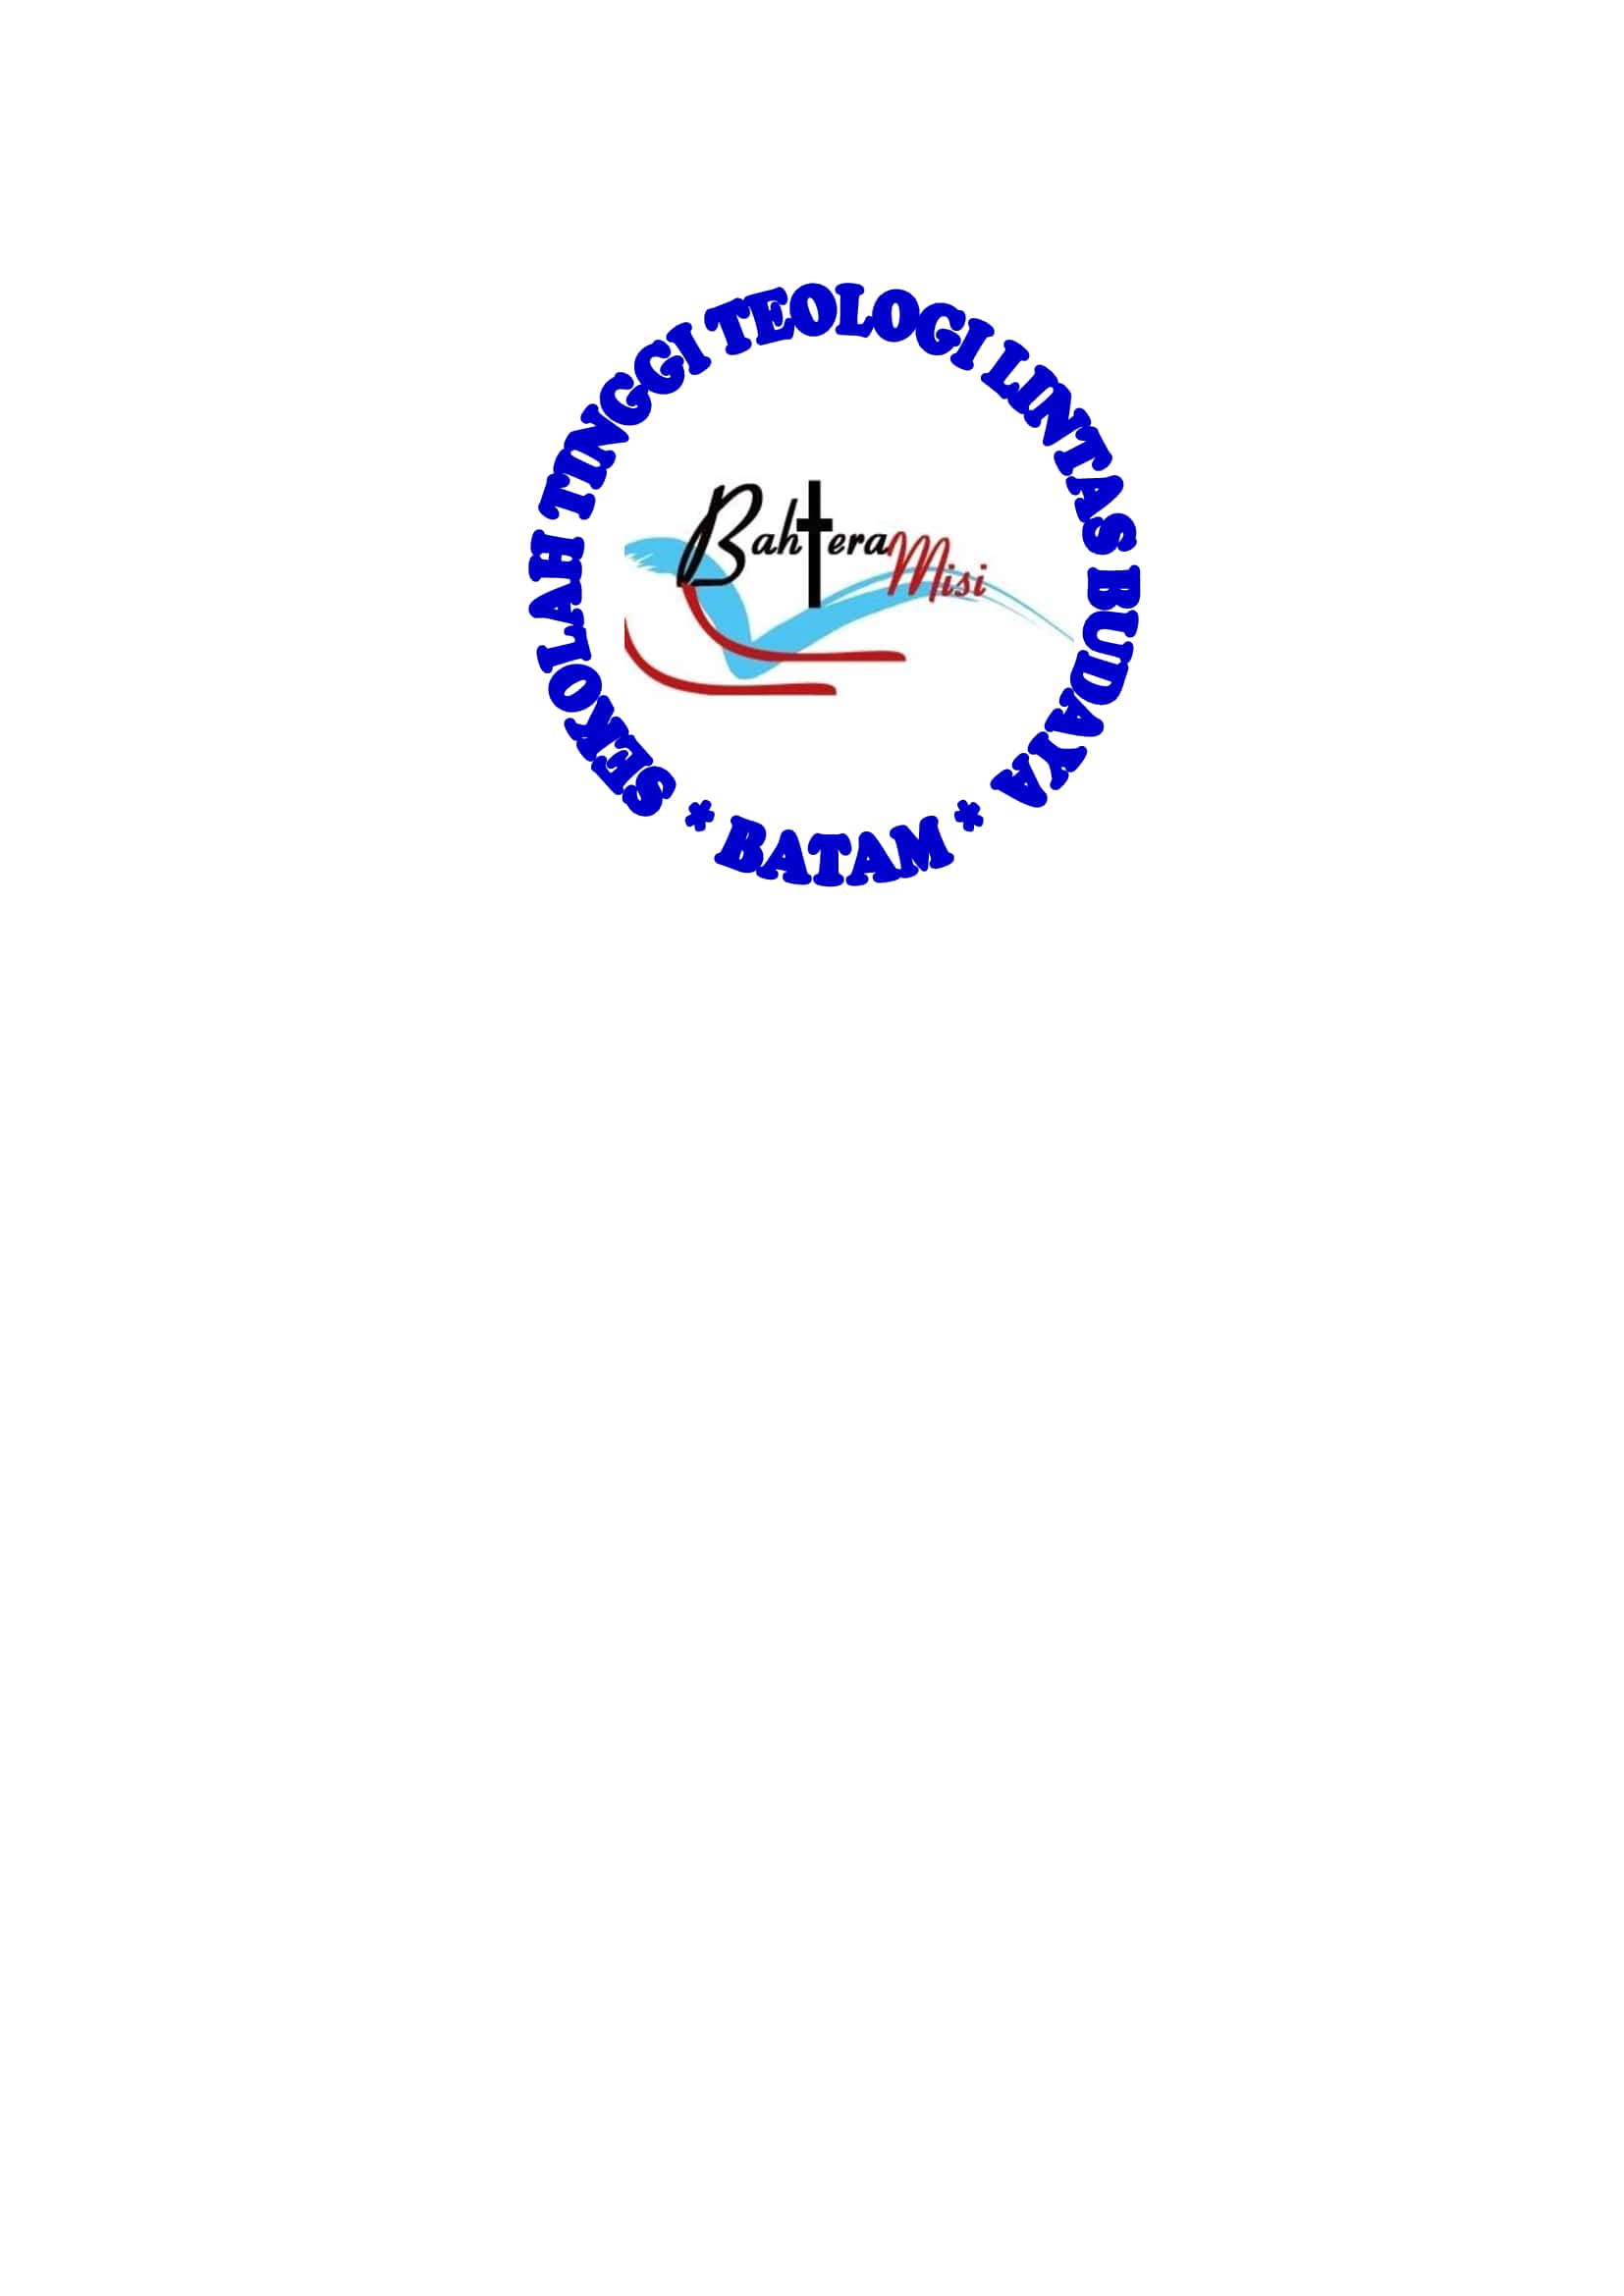 logo STT Lintas Budaya Batam